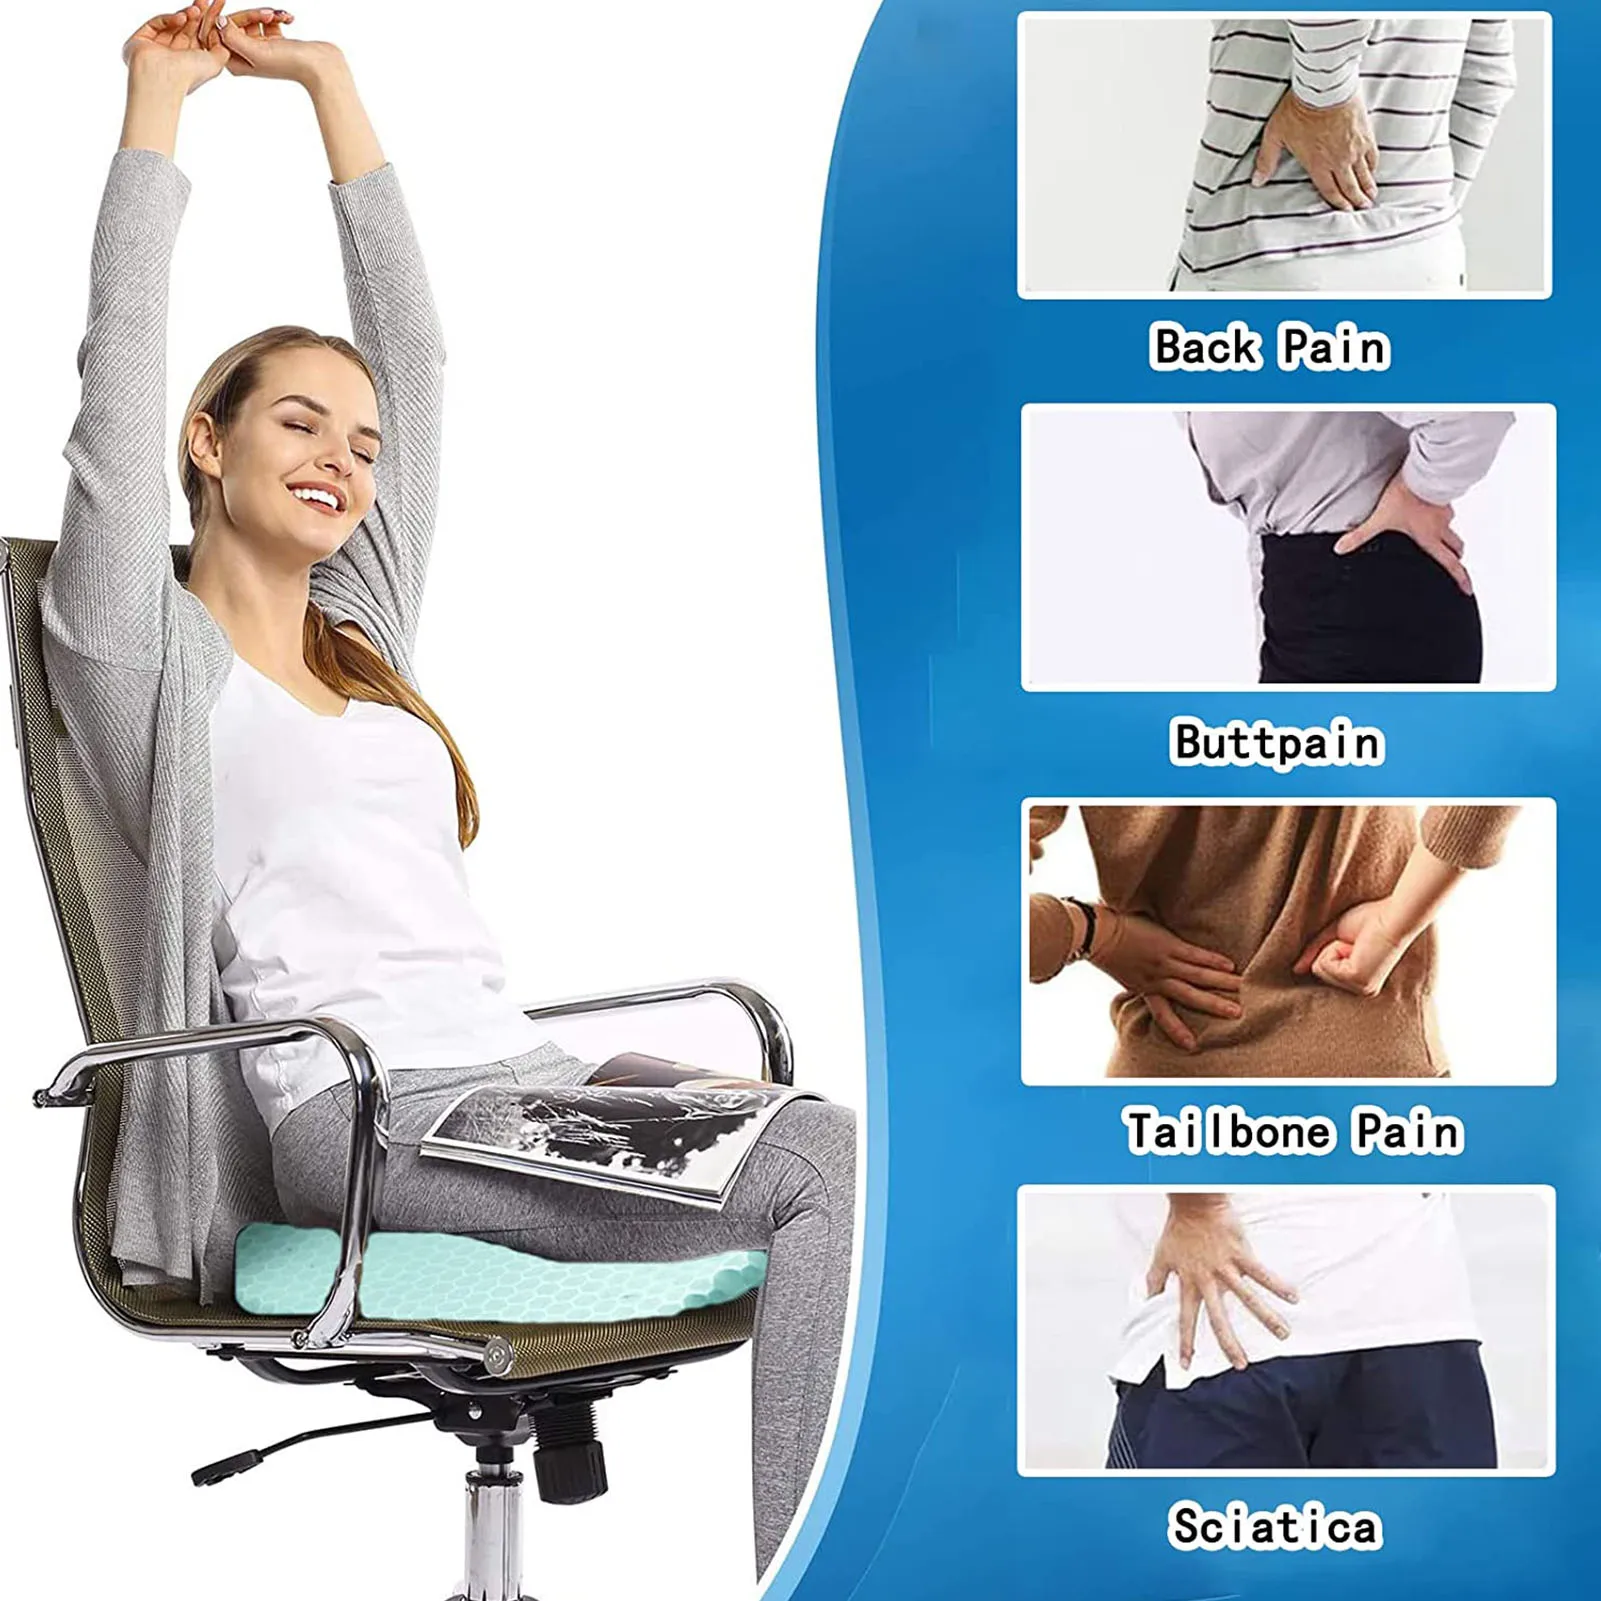 https://ae01.alicdn.com/kf/S75afe9240603411f890c2fcaaeca3615f/Seat-Cushion-Breathable-Butt-Pad-Ice-Pad-Gel-Pad-Non-slip-Wear-resistant-Long-Sit-Soft.jpg